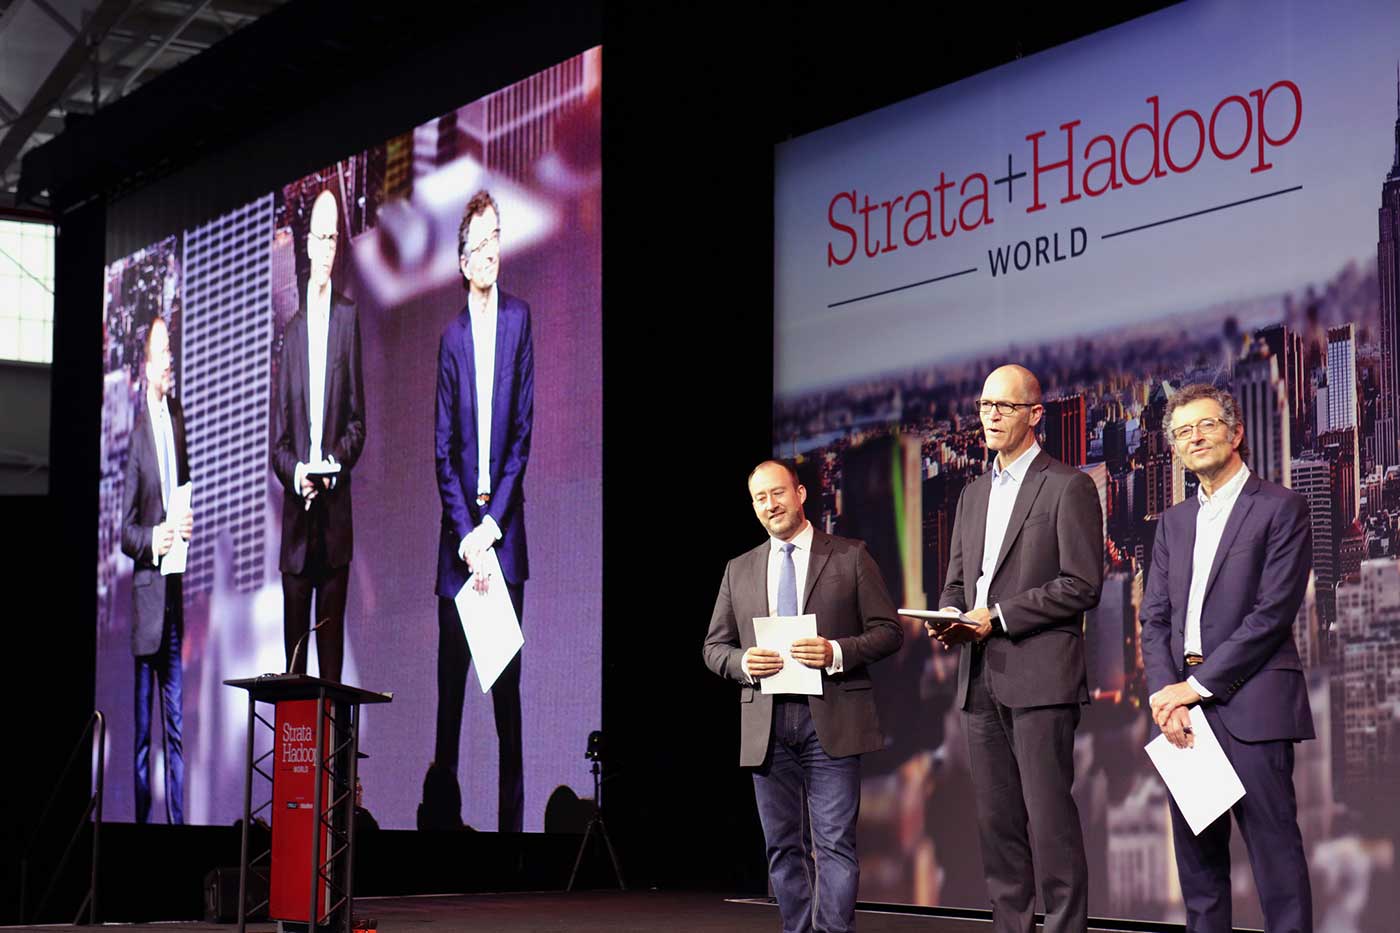 Strata + Hadoop World NY 2016 keynote stage